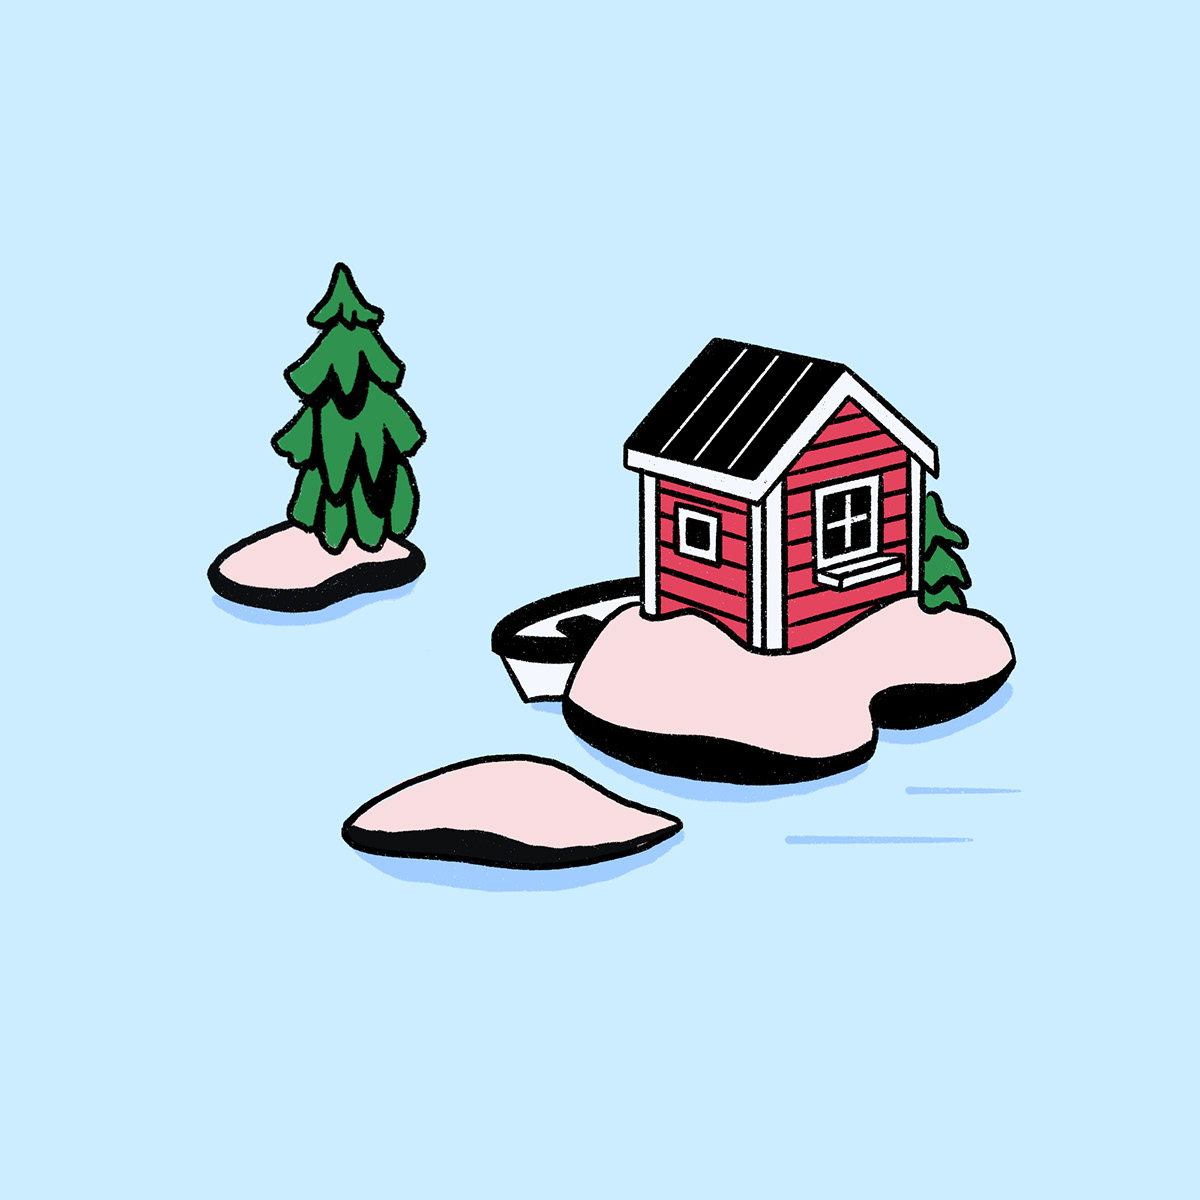 small cabin on little islands - illustration